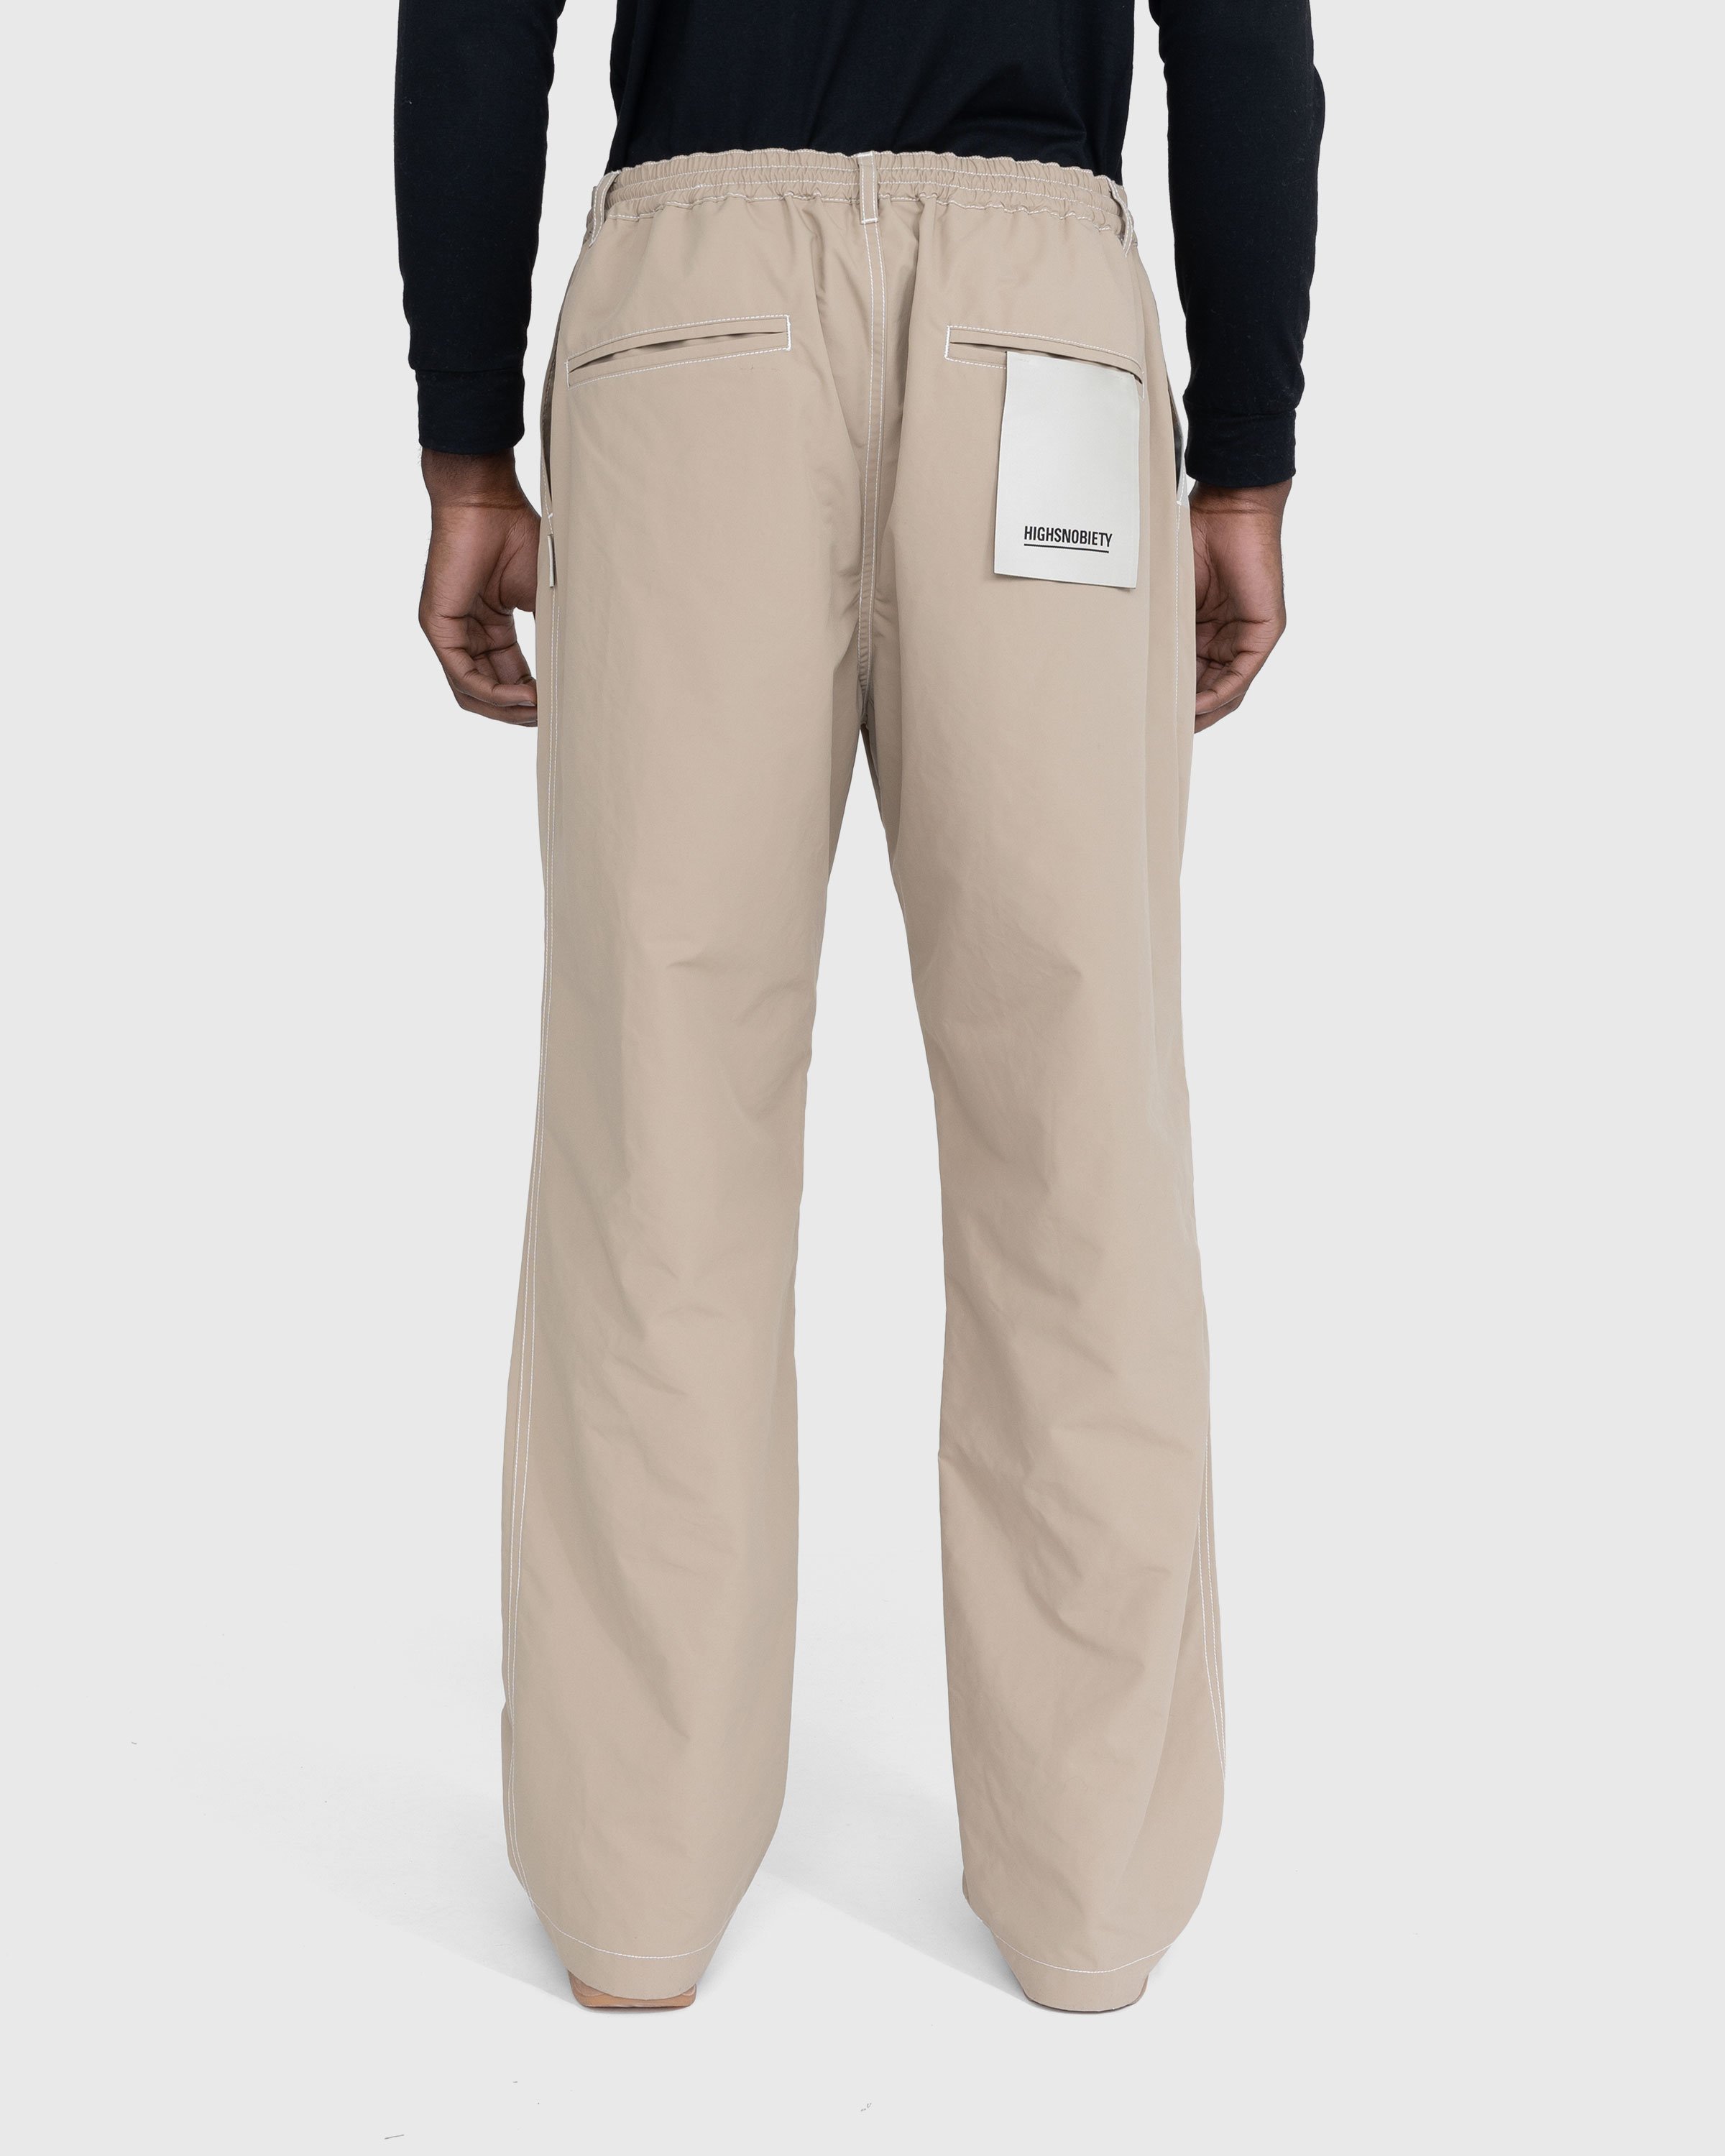 Highsnobiety - Contrast Stitch Pants Beige - Clothing - Beige - Image 6